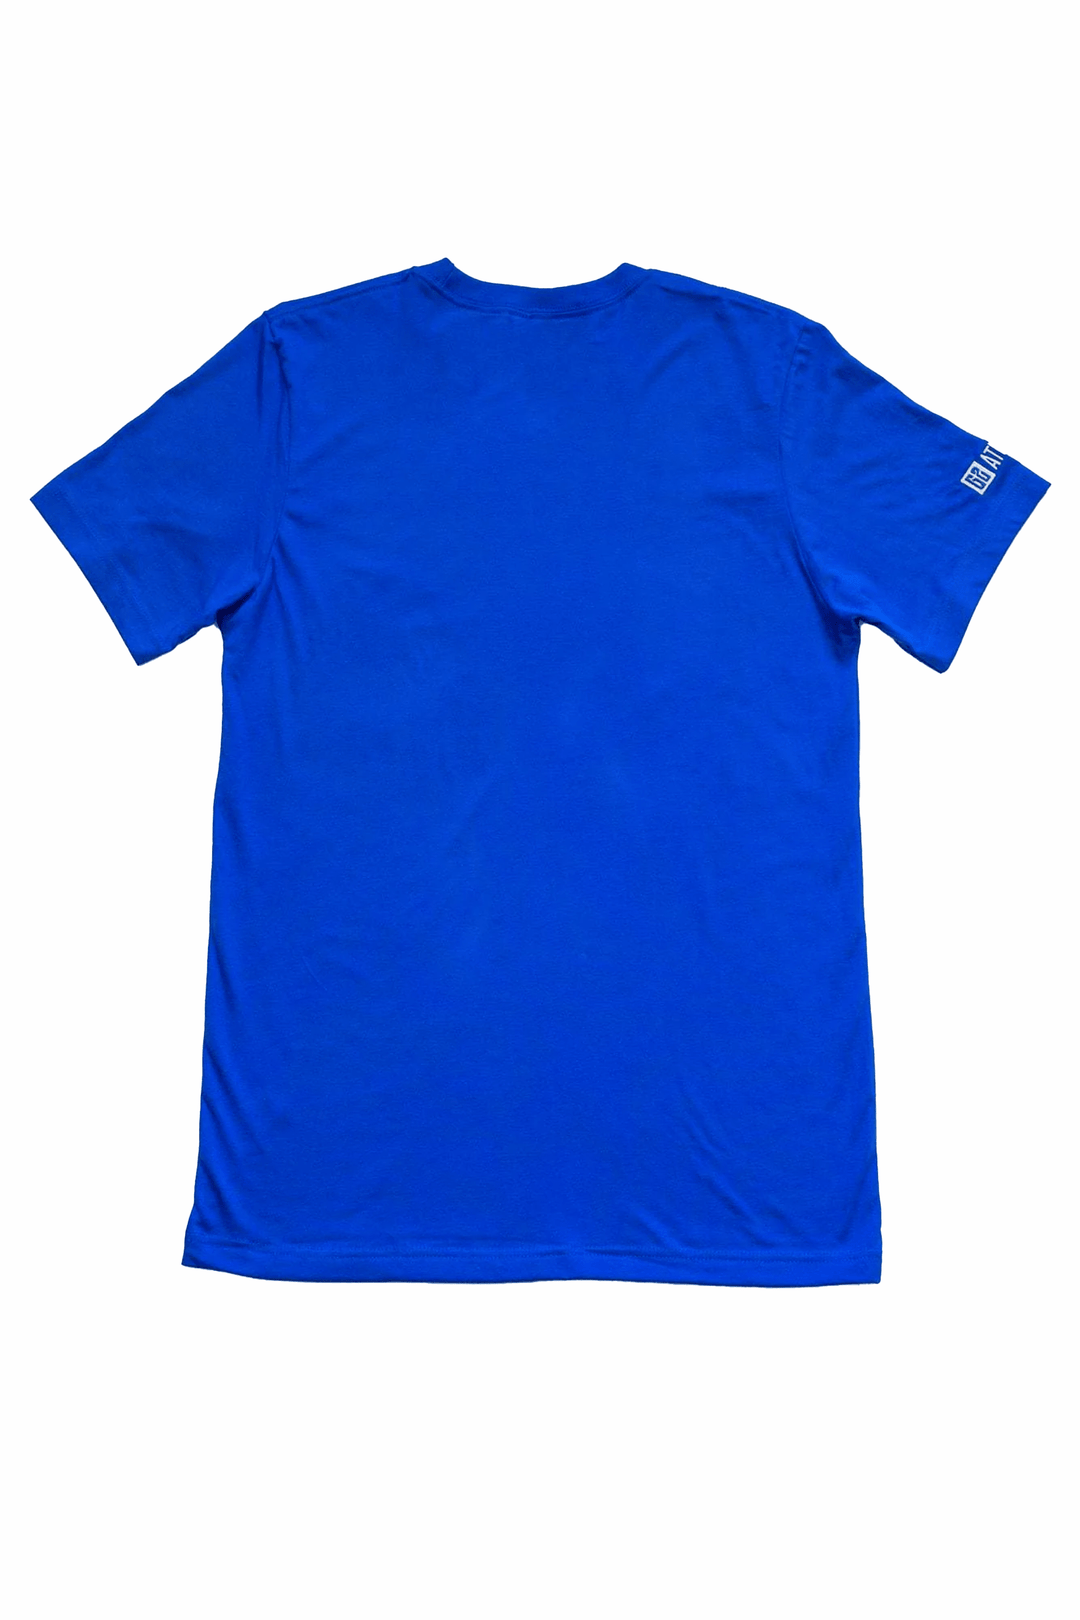 G2 Atlantis T-Shirt